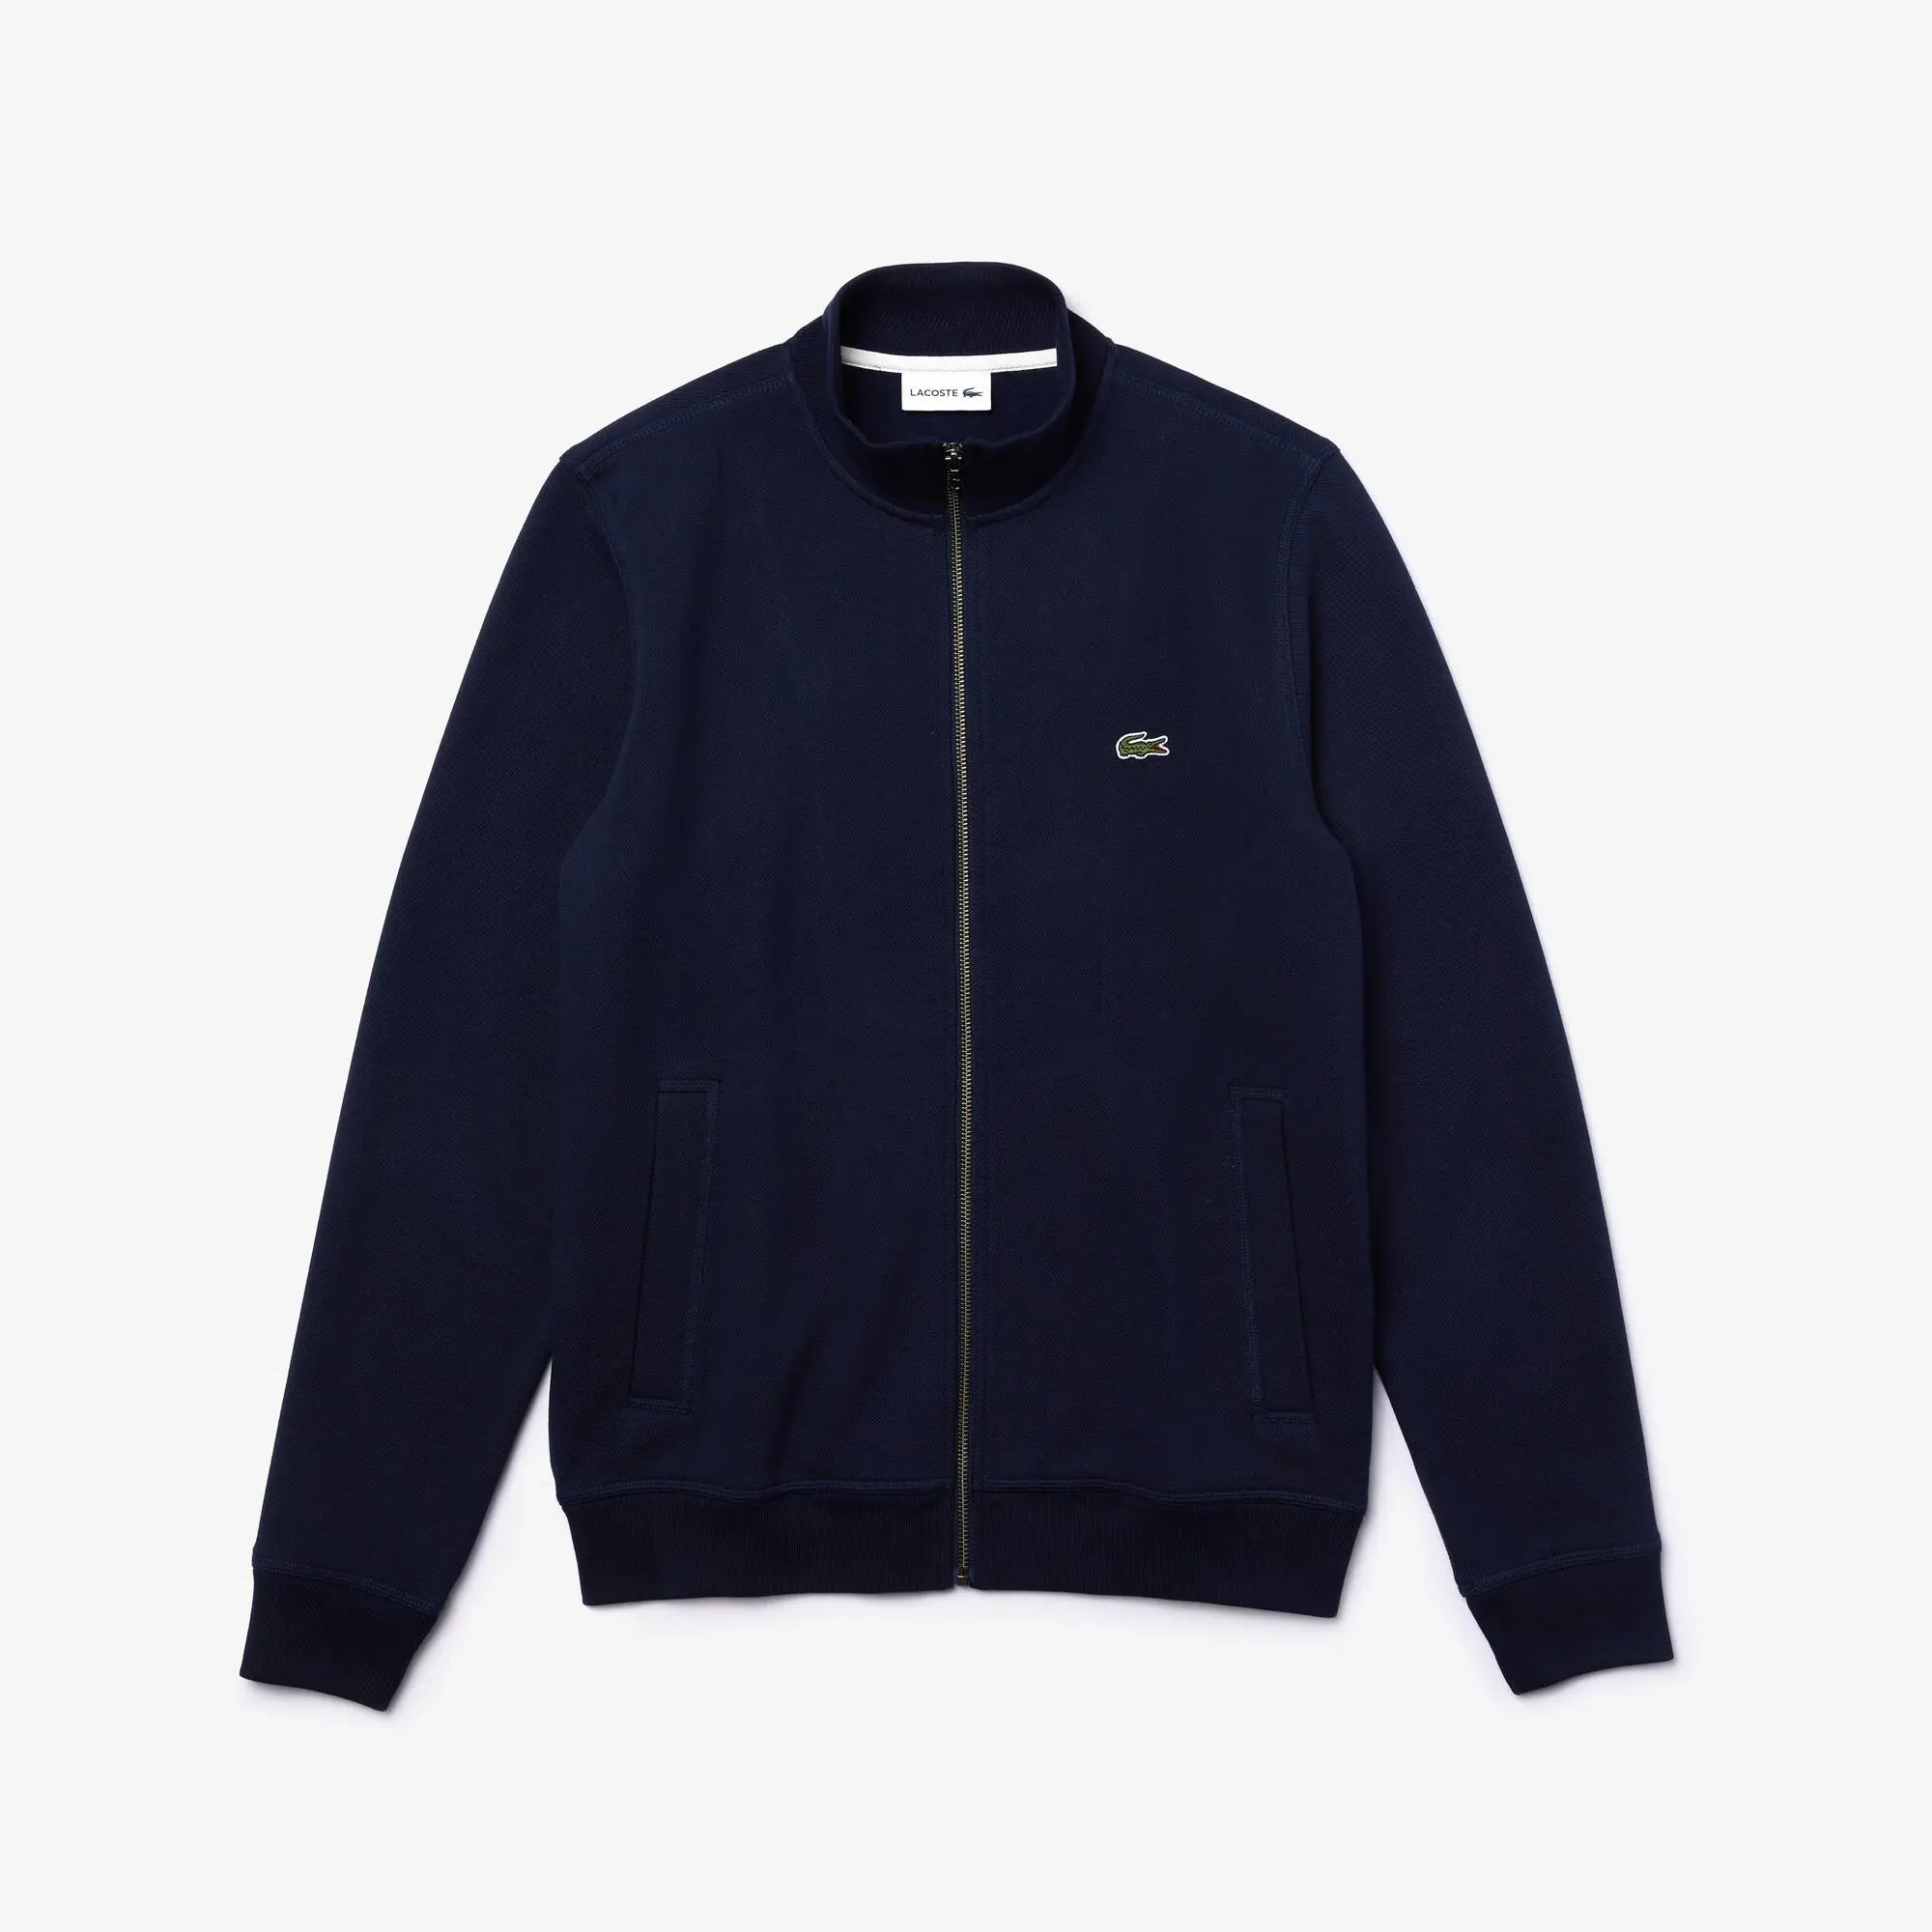 Lacoste Men's Zippered Stand-Up Collar Piqué Fleece Jacket. 2